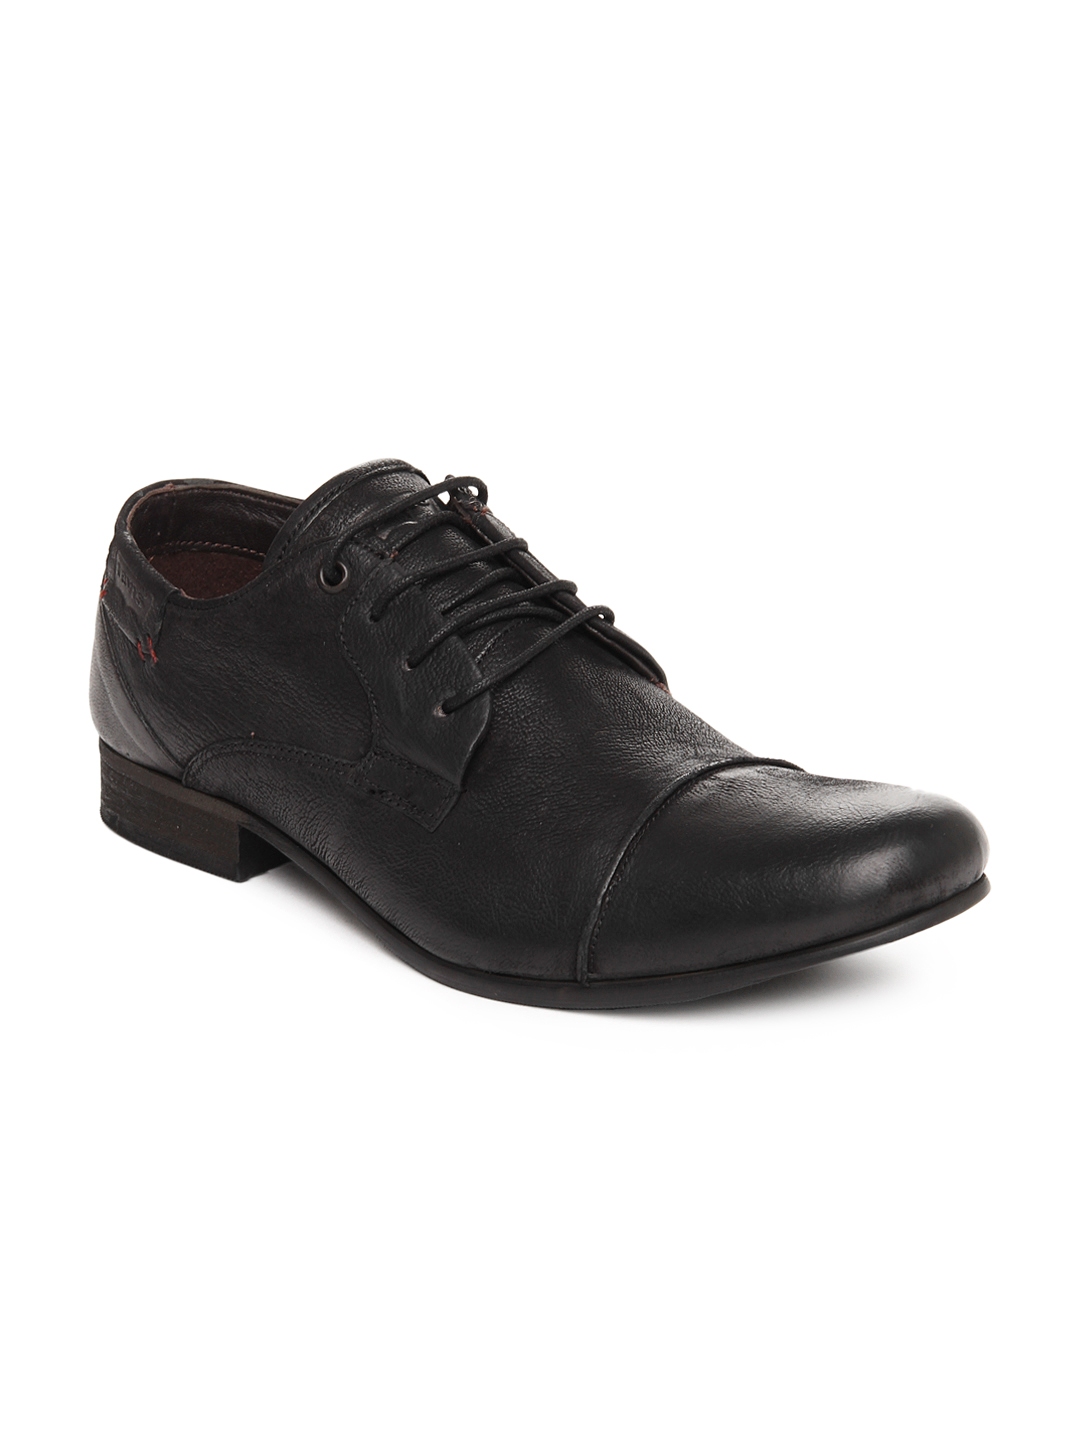 Buy Levis Men Black Leather Semi Formal Shoes - Formal Shoes for Men 167164  | Myntra